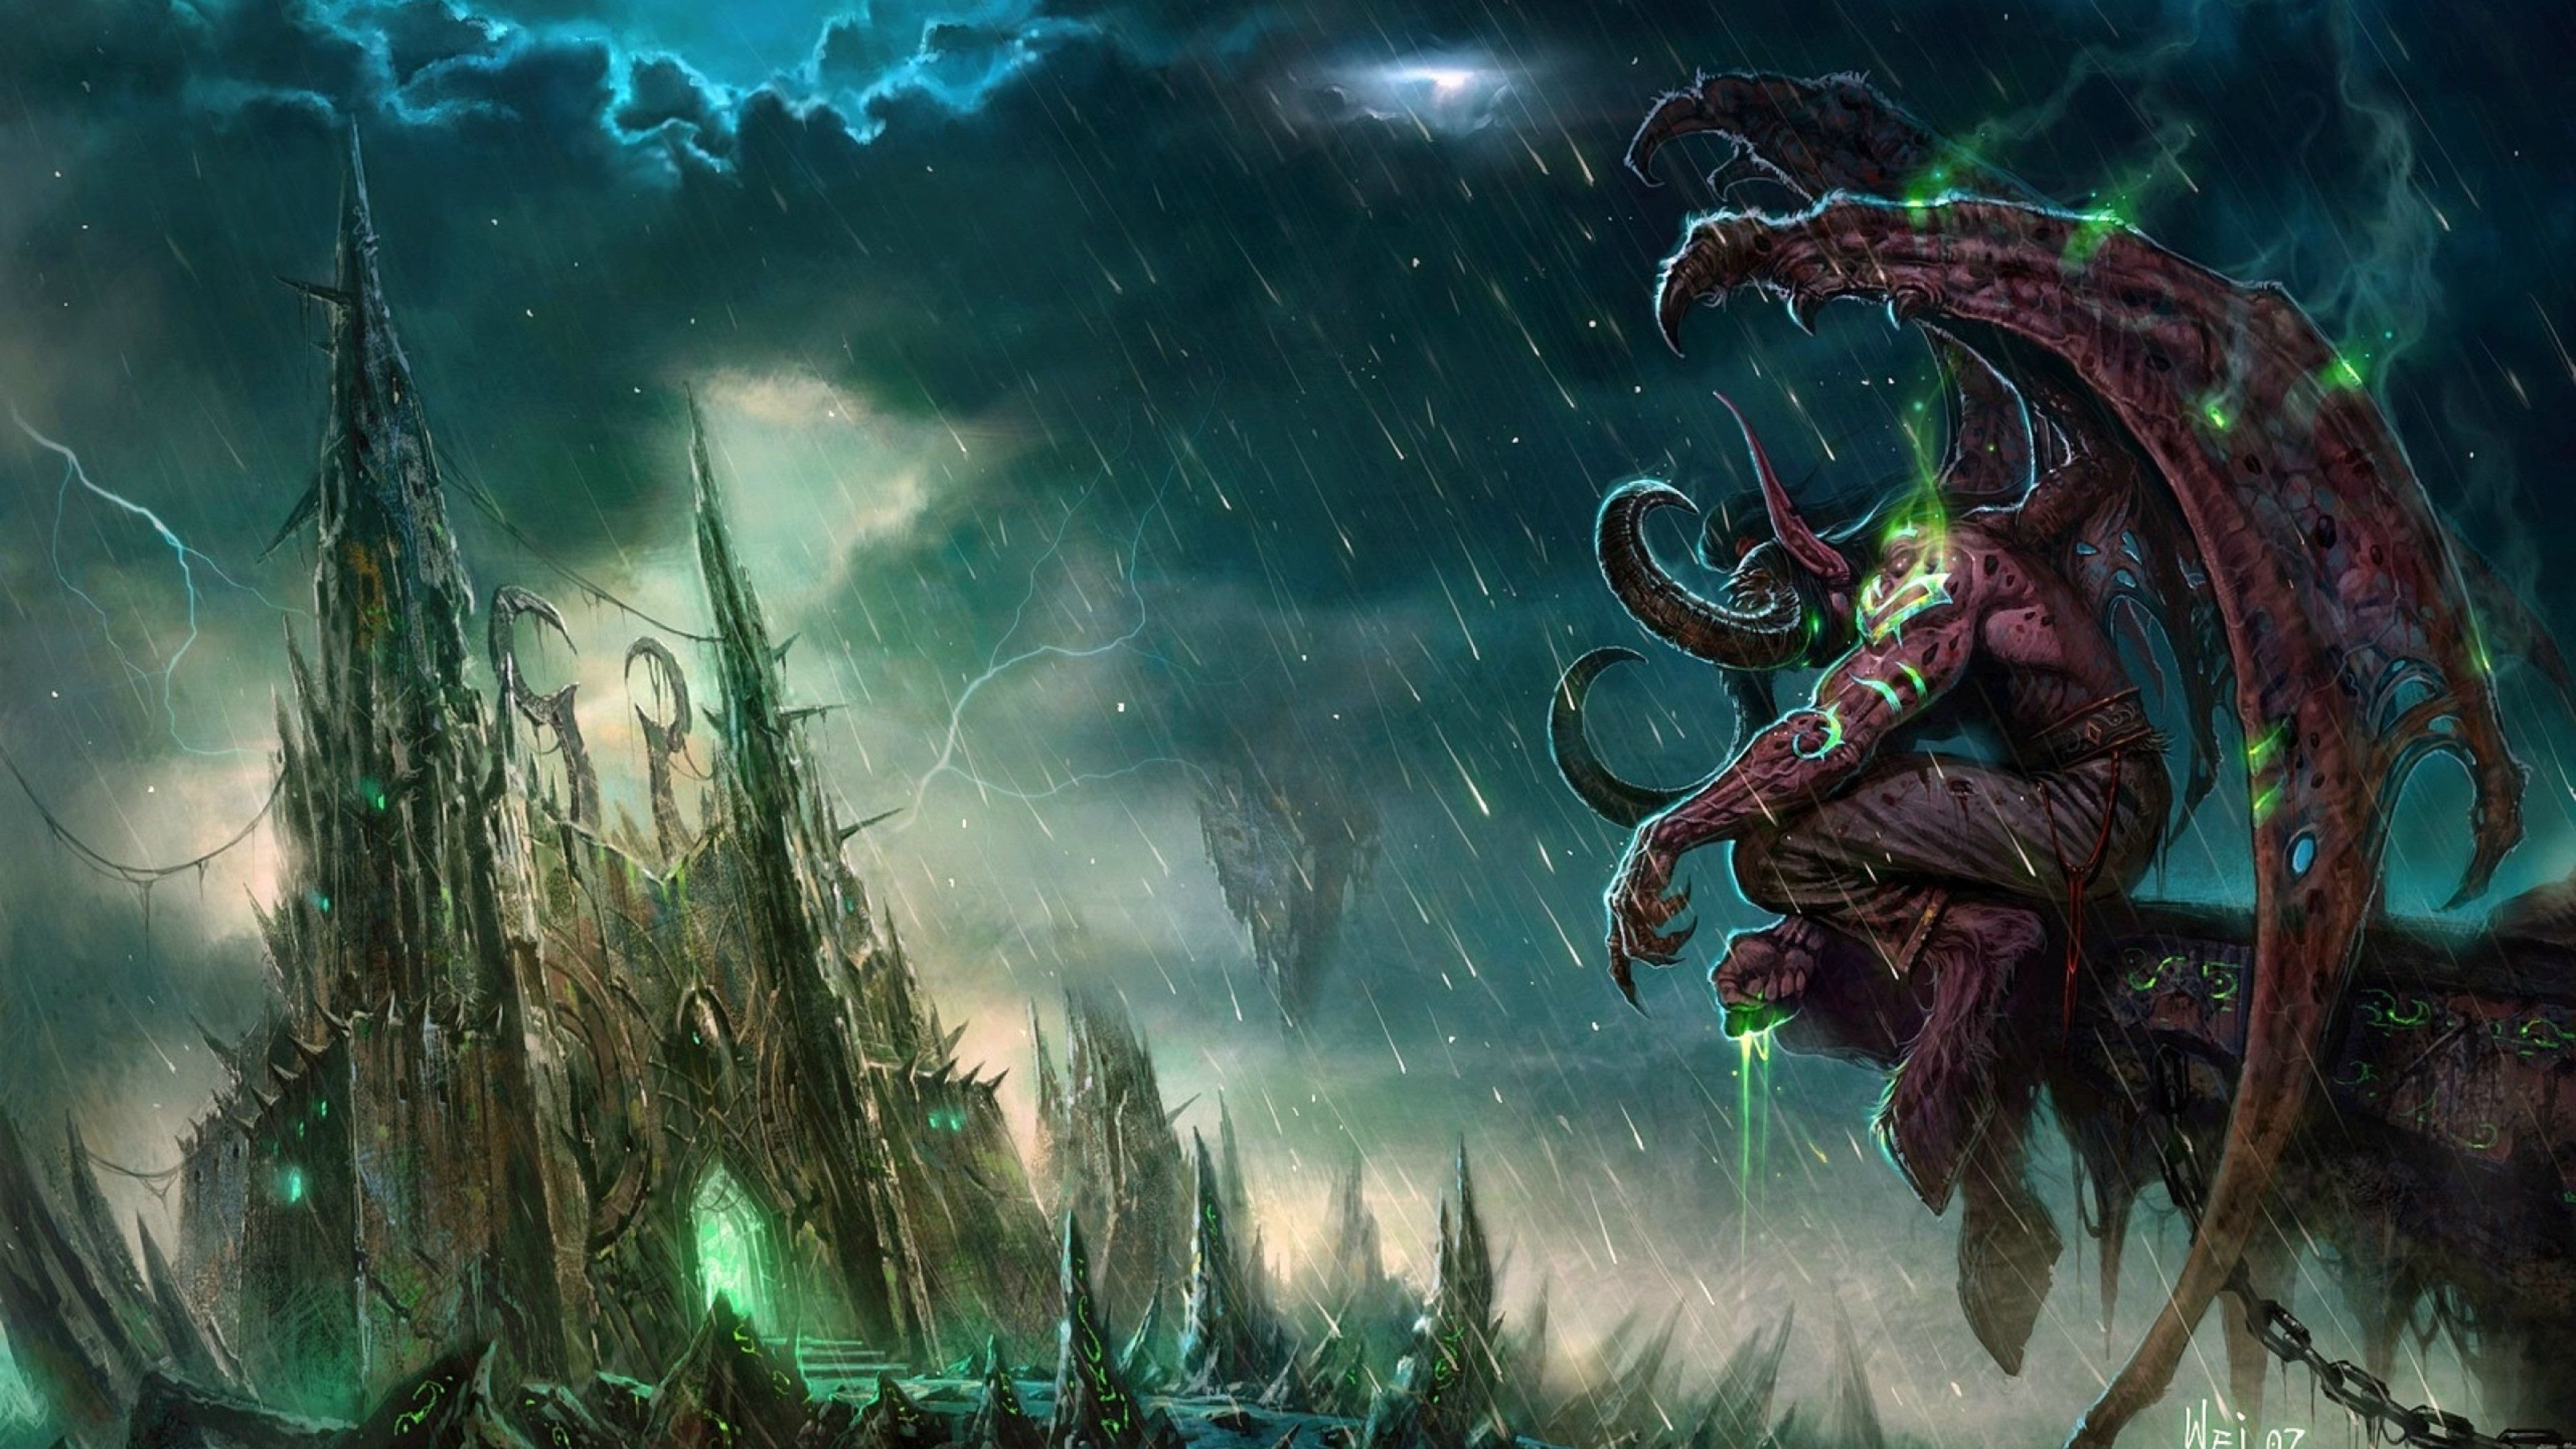 3840x2160 World of Warcraft: Legion Beta - Demon Hunter full starting zone.  [SPOILERS] - YouTube